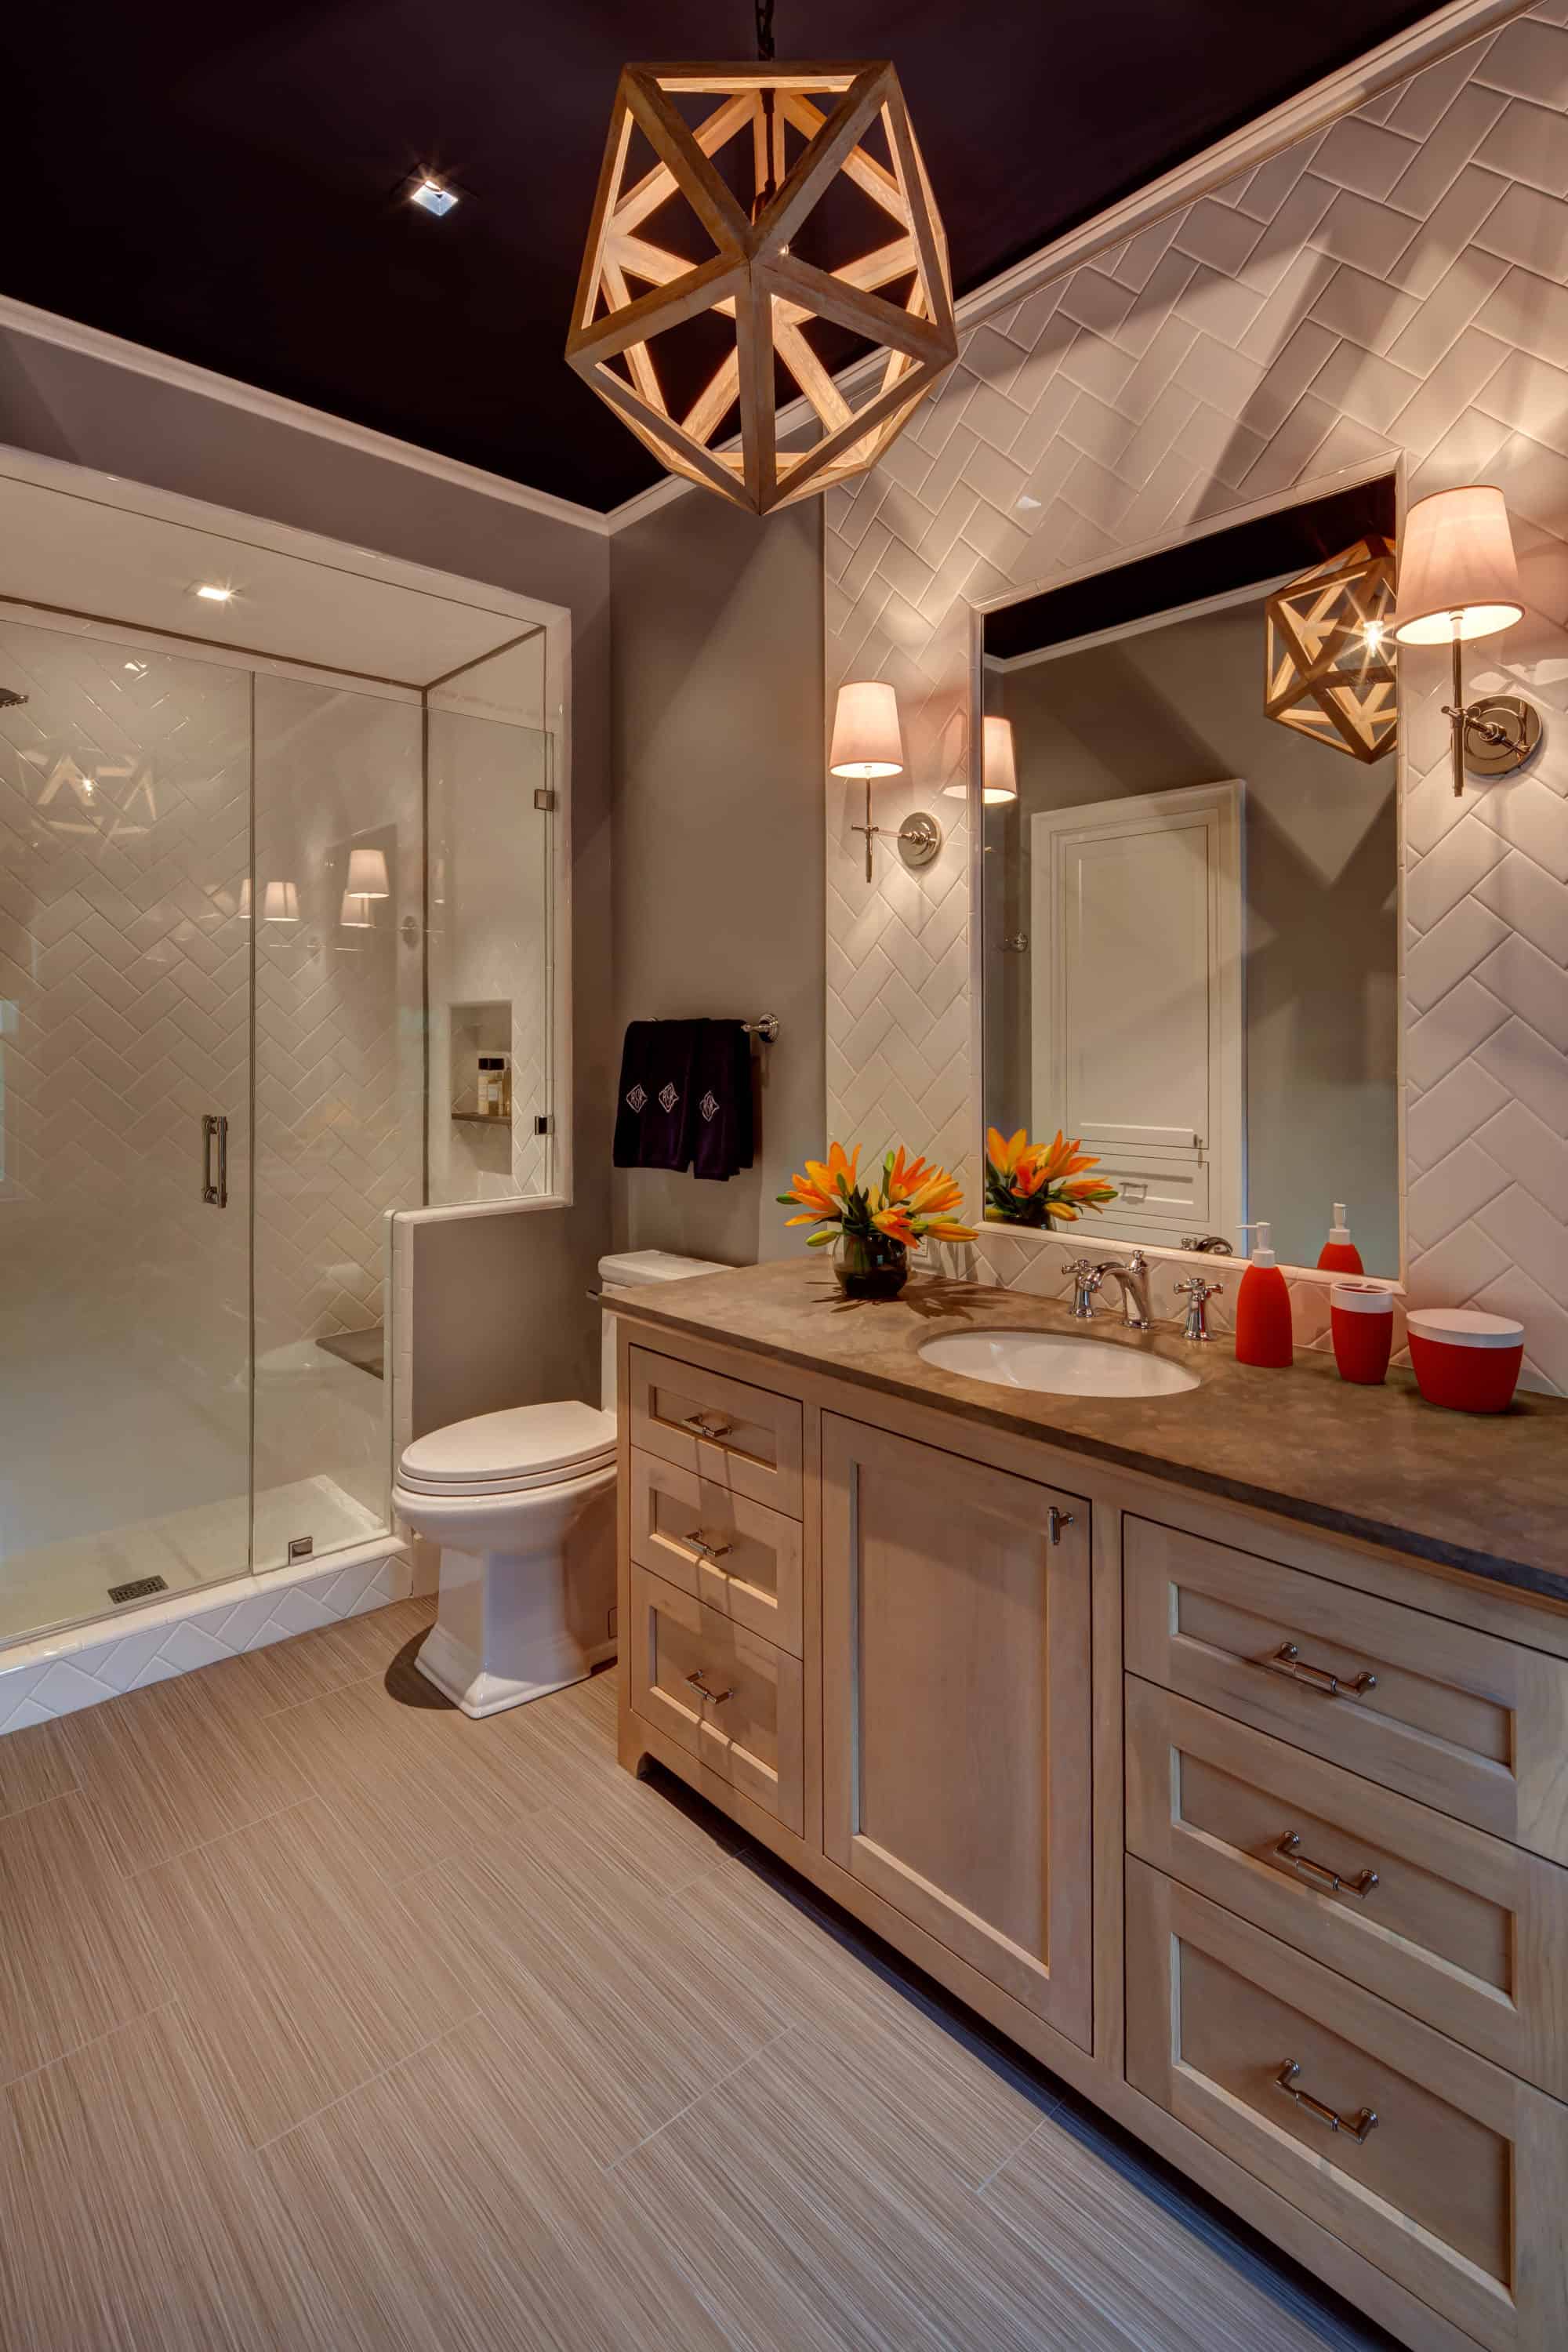 This dimly lit bathroom showcases a glass shower